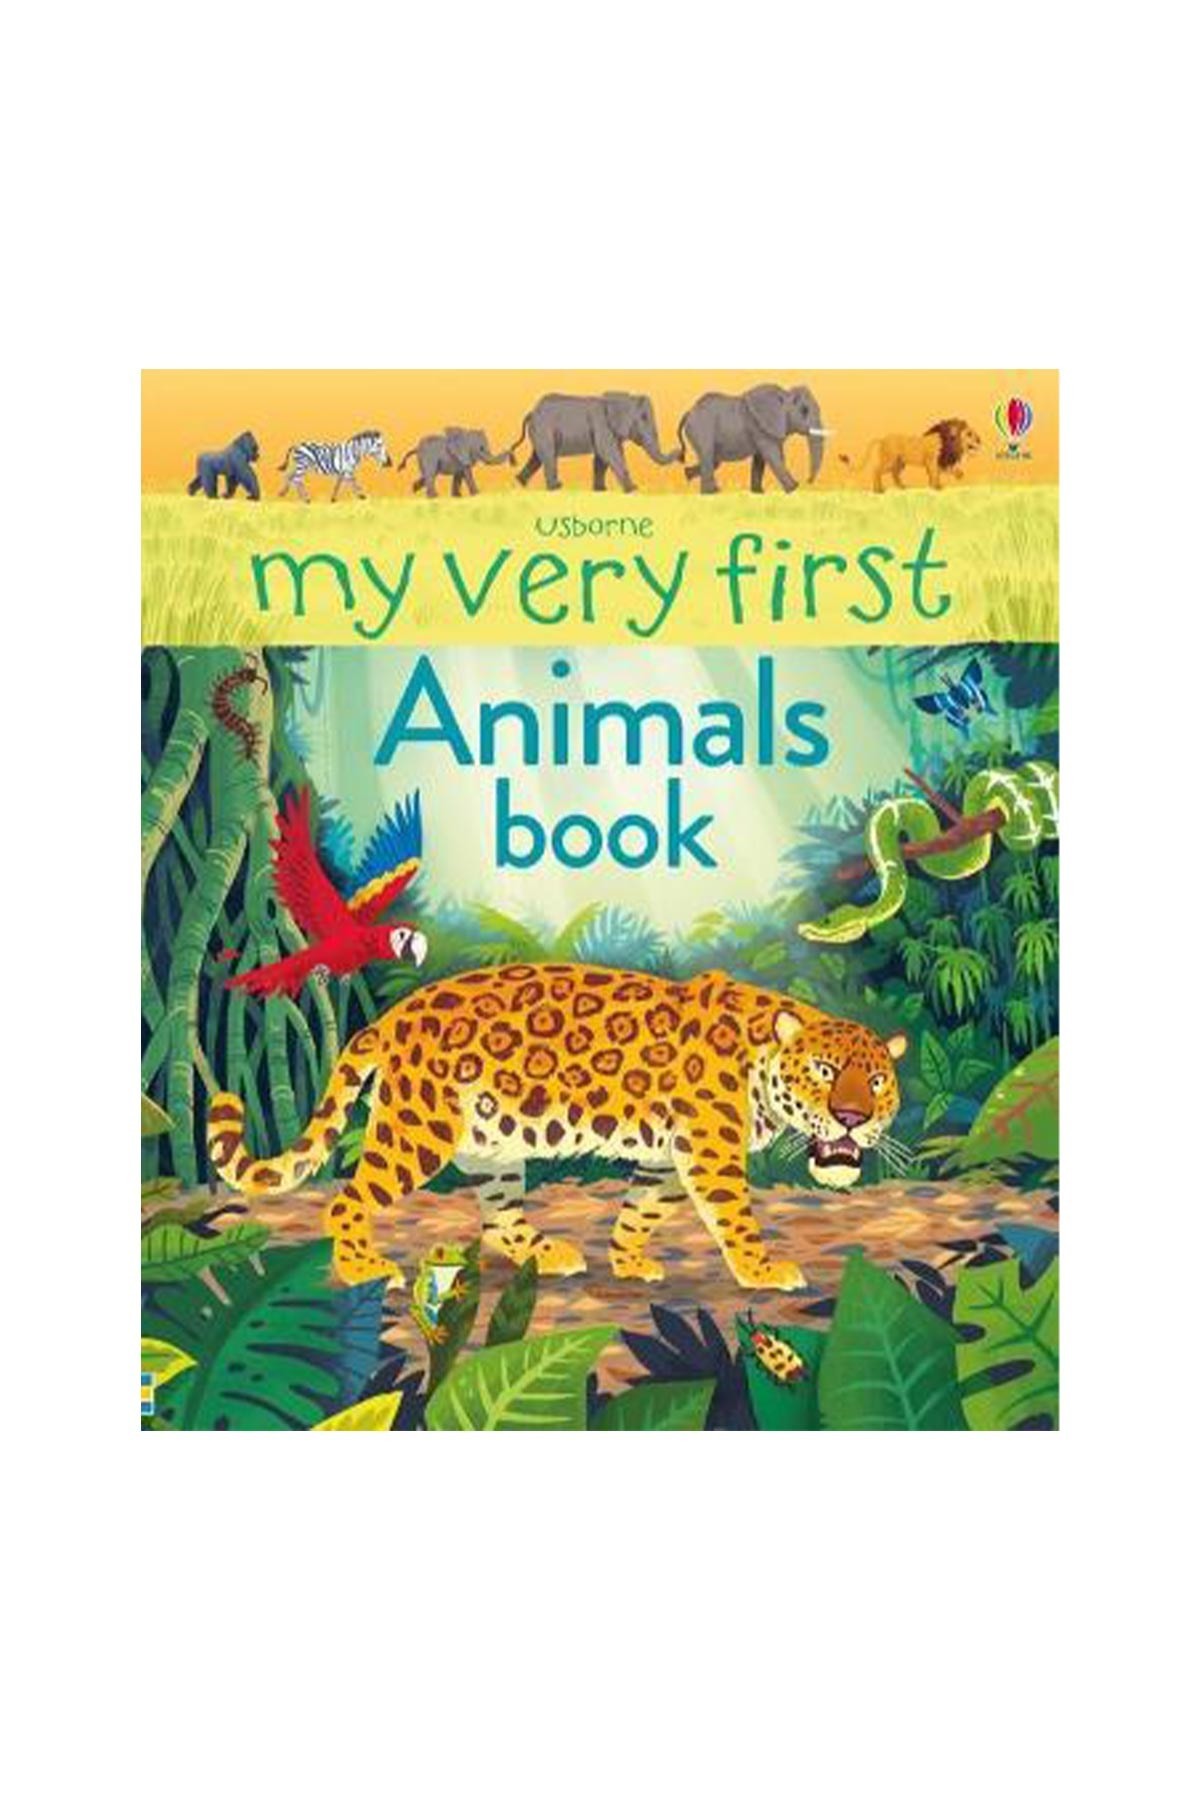 The Usborne My Very First Animals Book